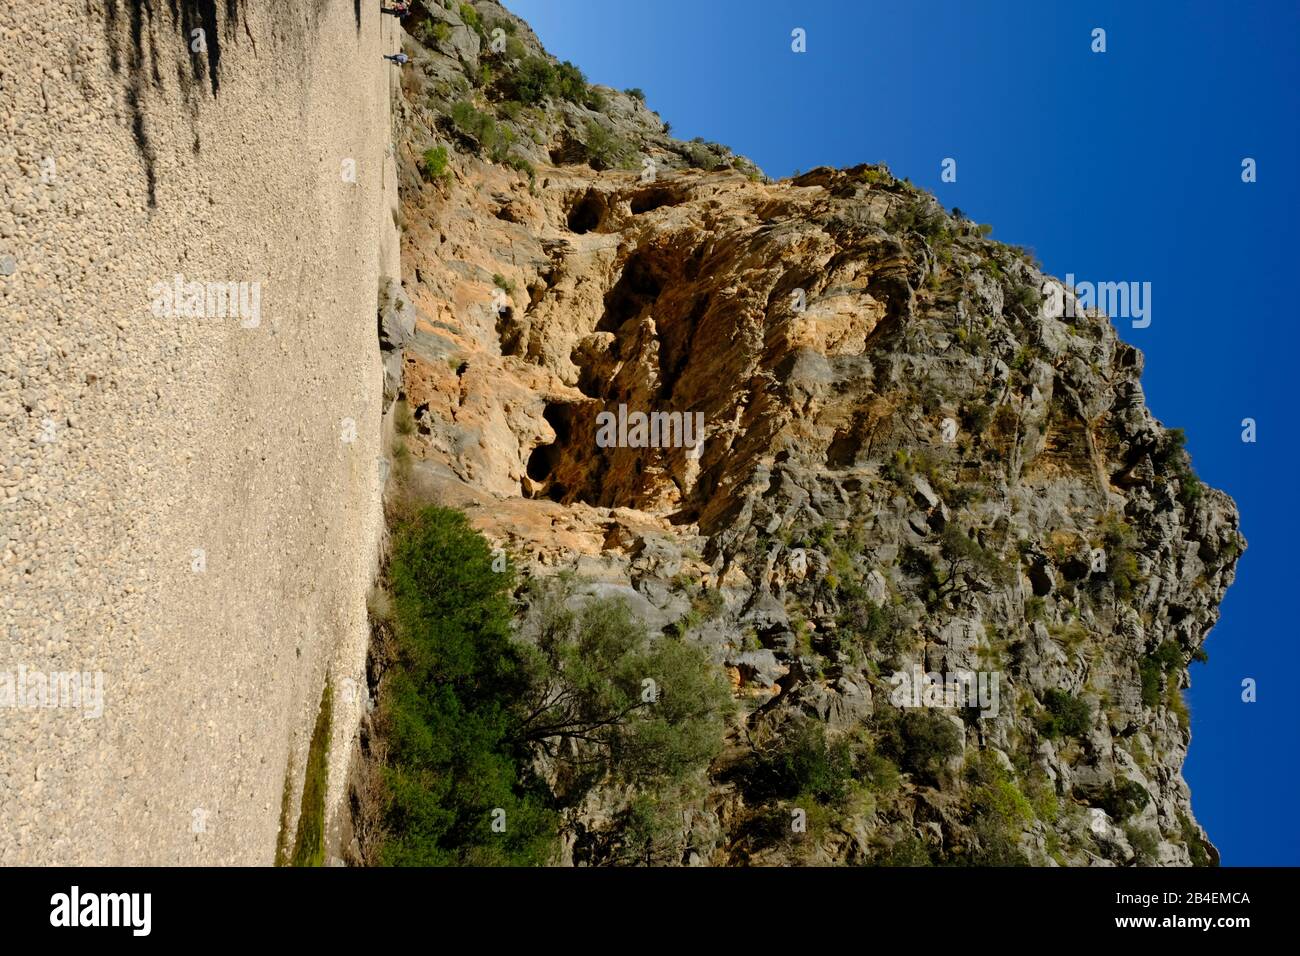 The canyon Torrent de Pareis at Sa Calobra in the Serra de Tramuntana, Mallorca, Balearic Islands, Spain Stock Photo